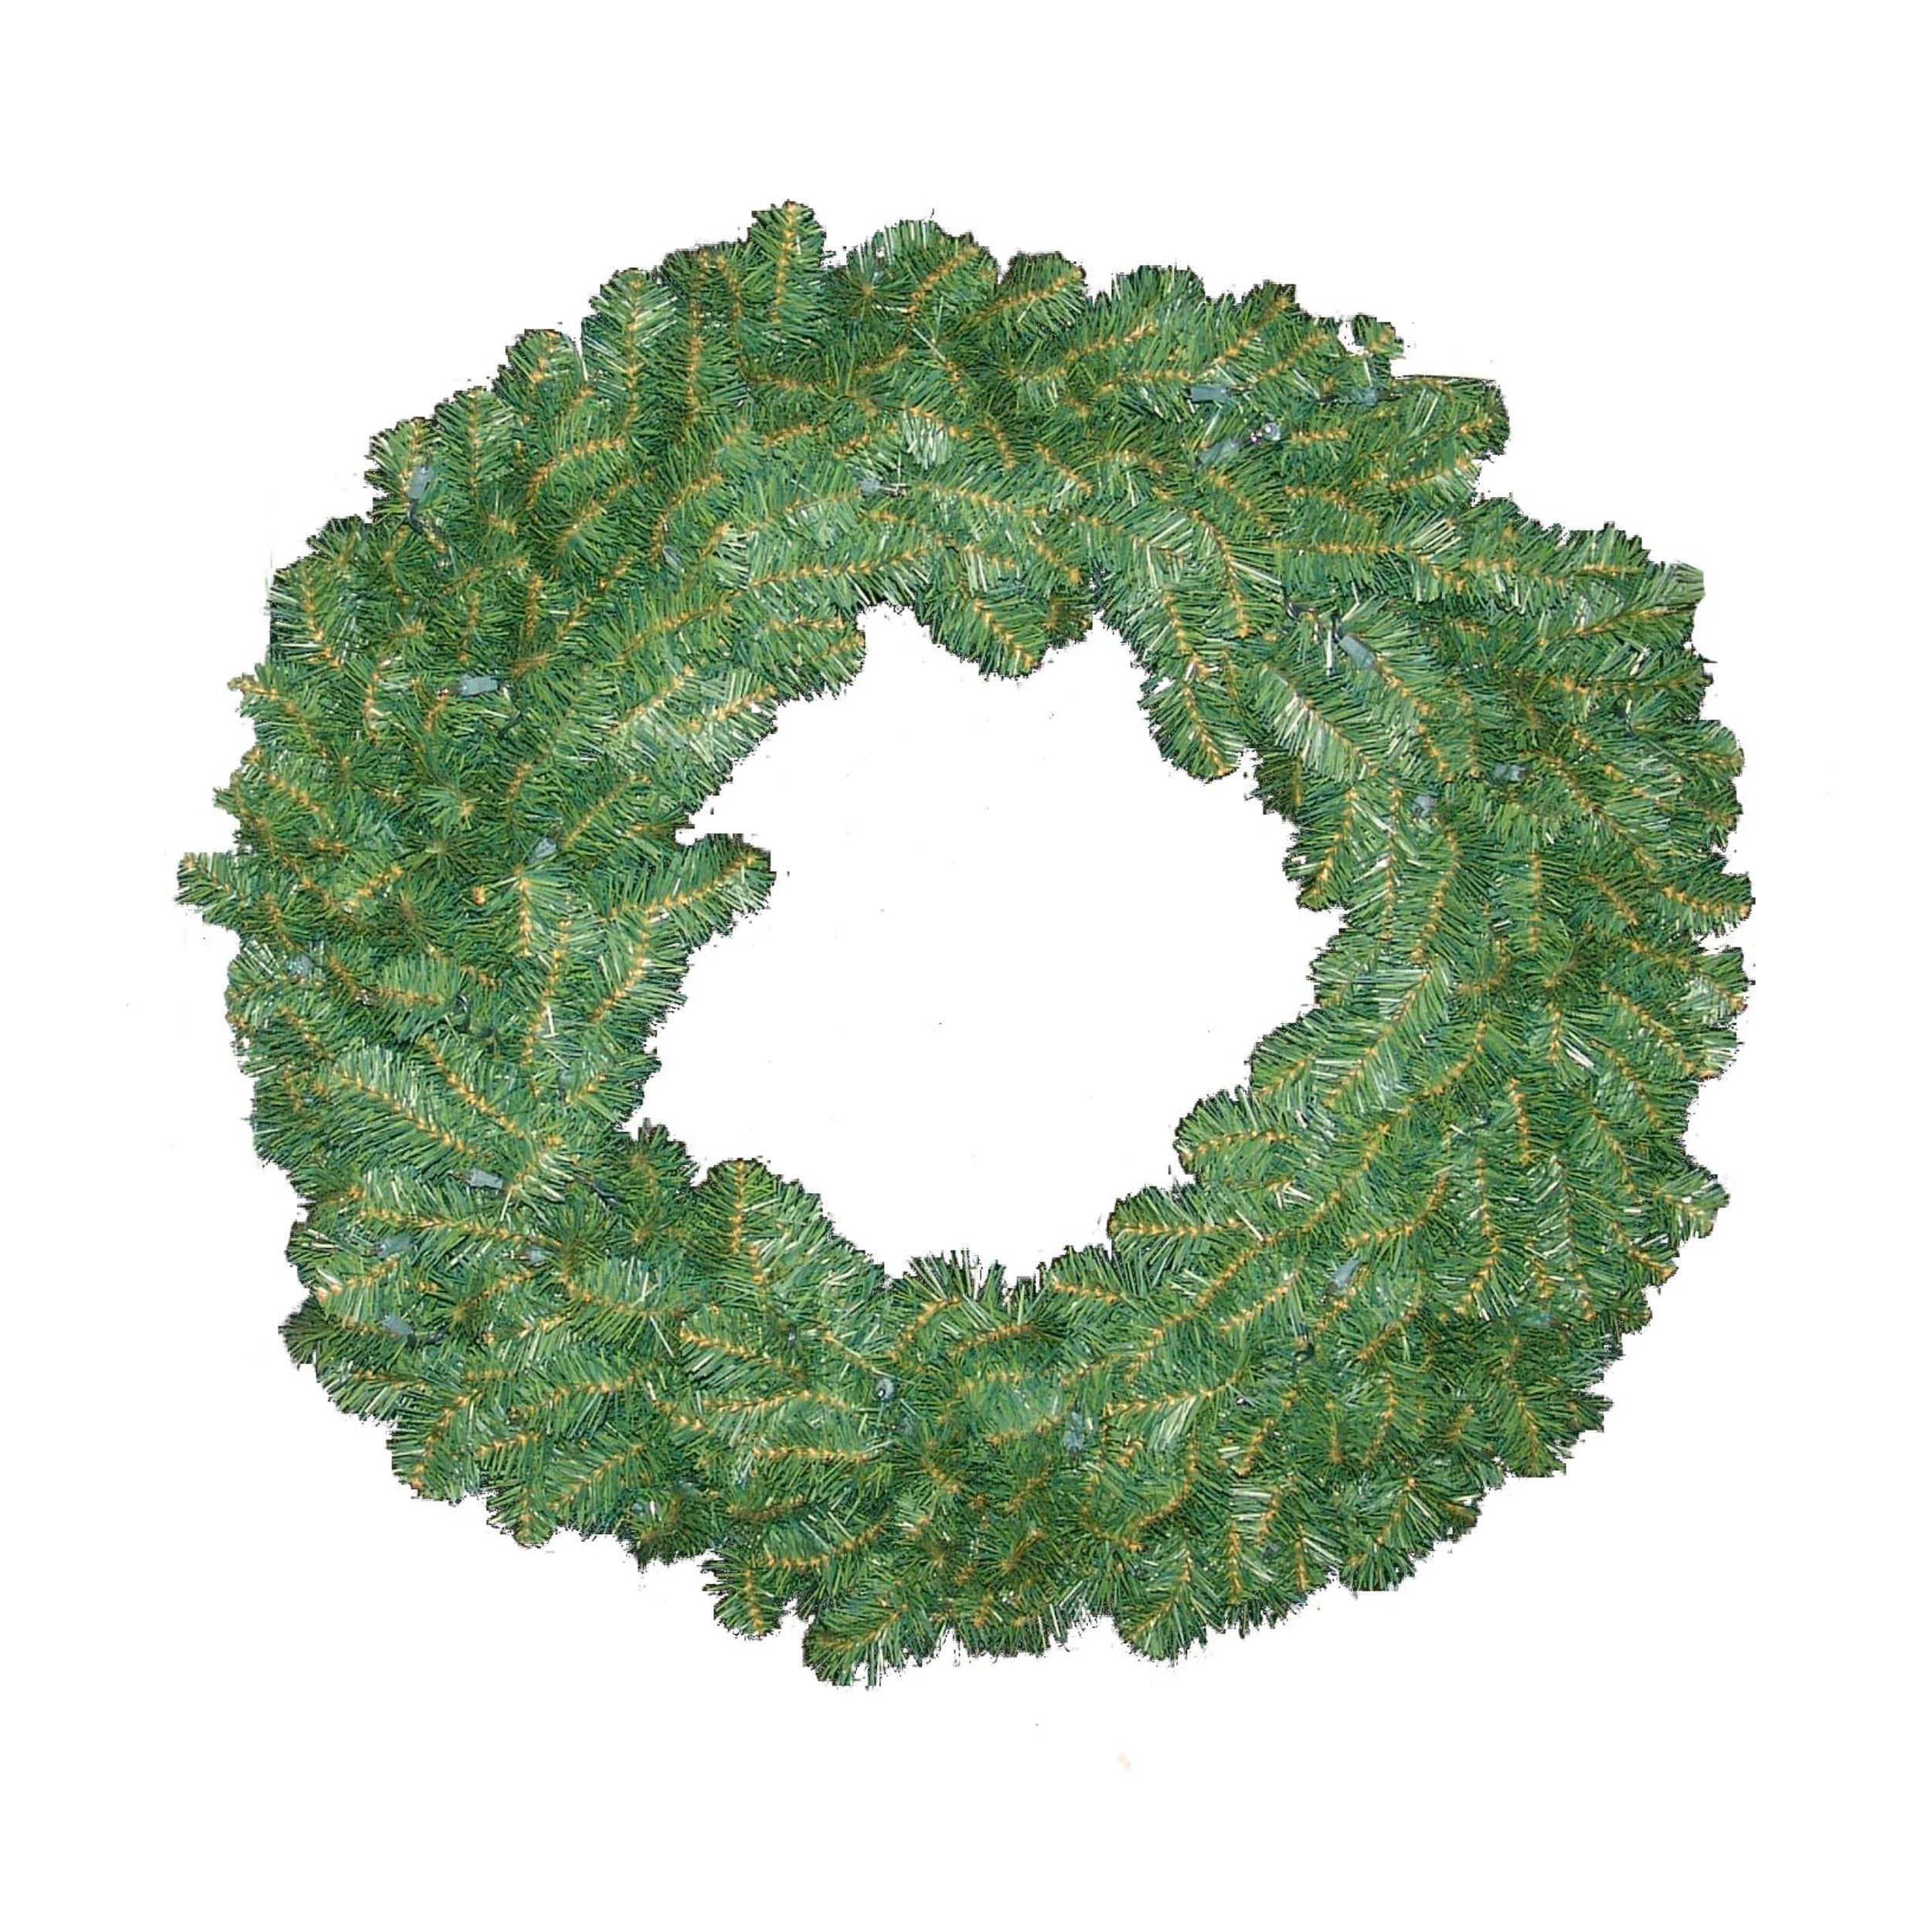 Northern Spruce Wreath - 360 Tips & 100 LED Lights - 36" Wide (Set of 6)